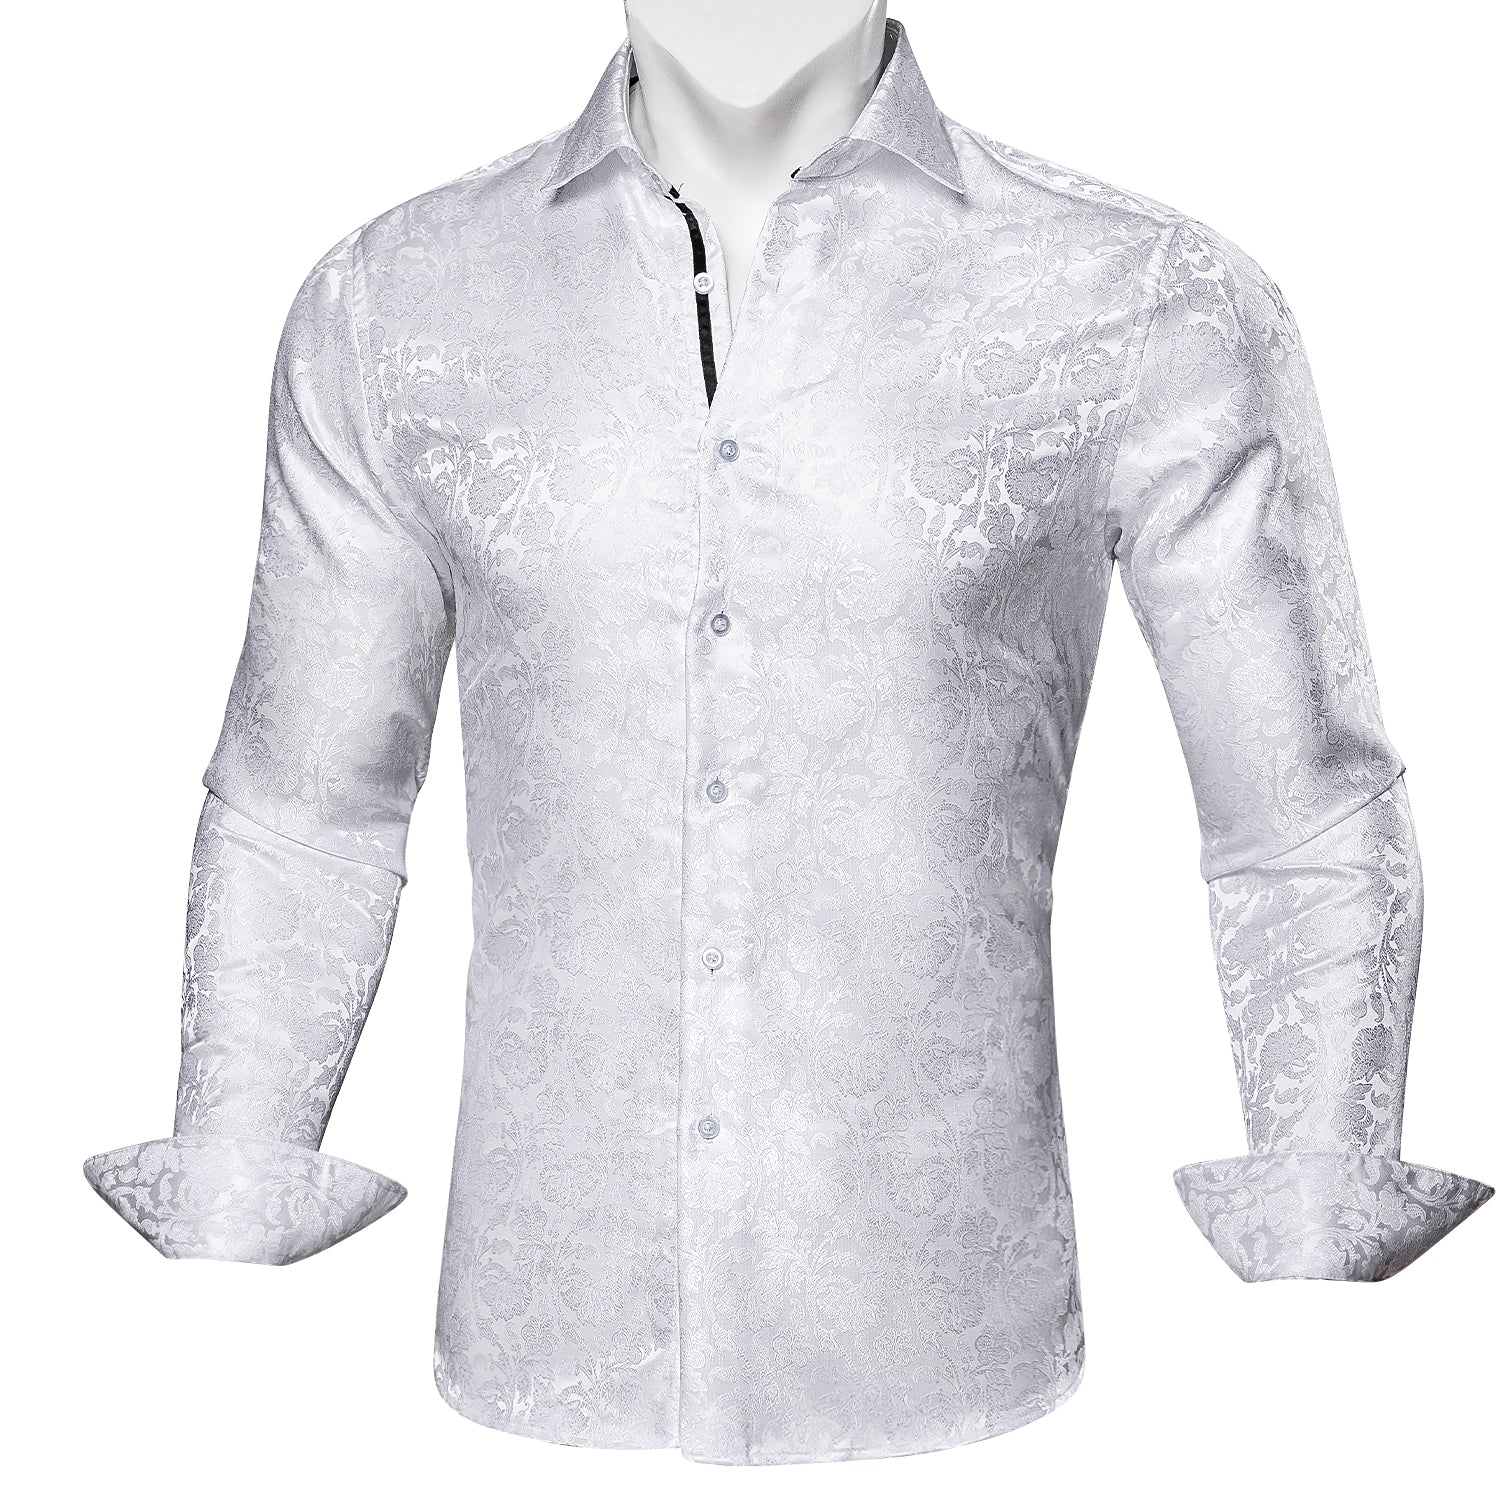 Barry.wang Button Down Shirt White Floral Silk Men's Shirt Hot Selling